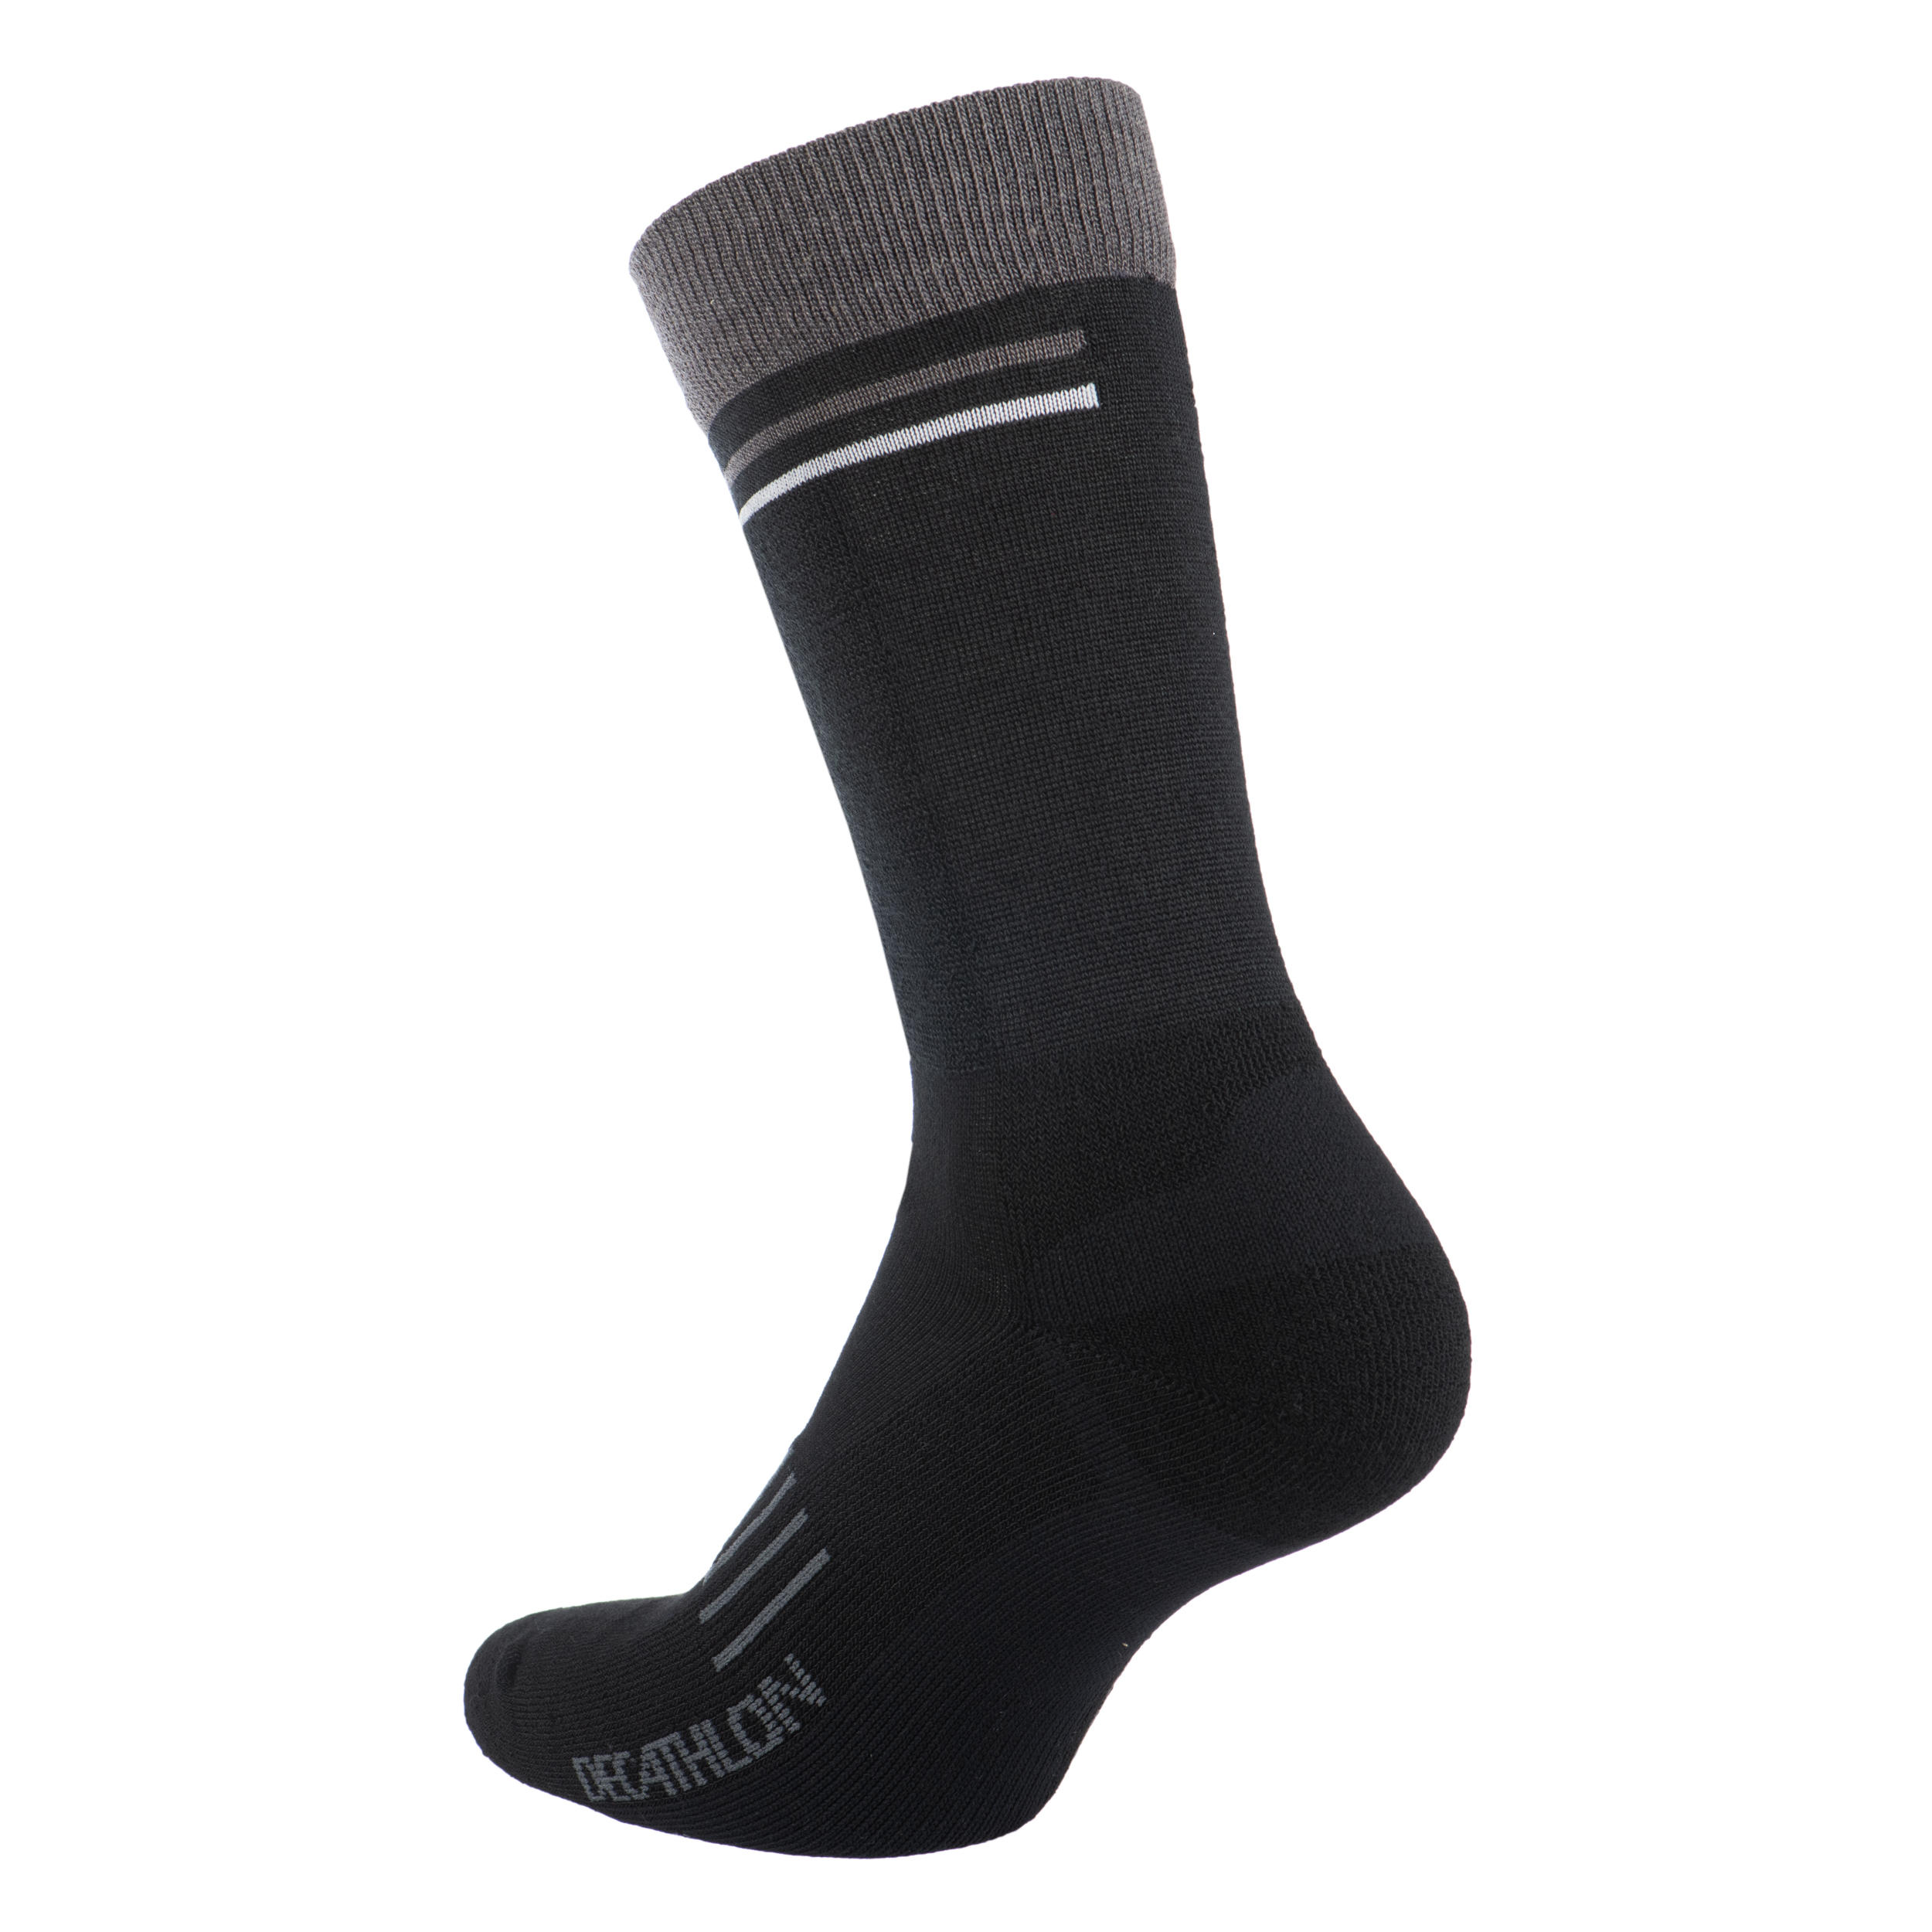 900 Winter Cycling Socks - Black/Grey 2/3